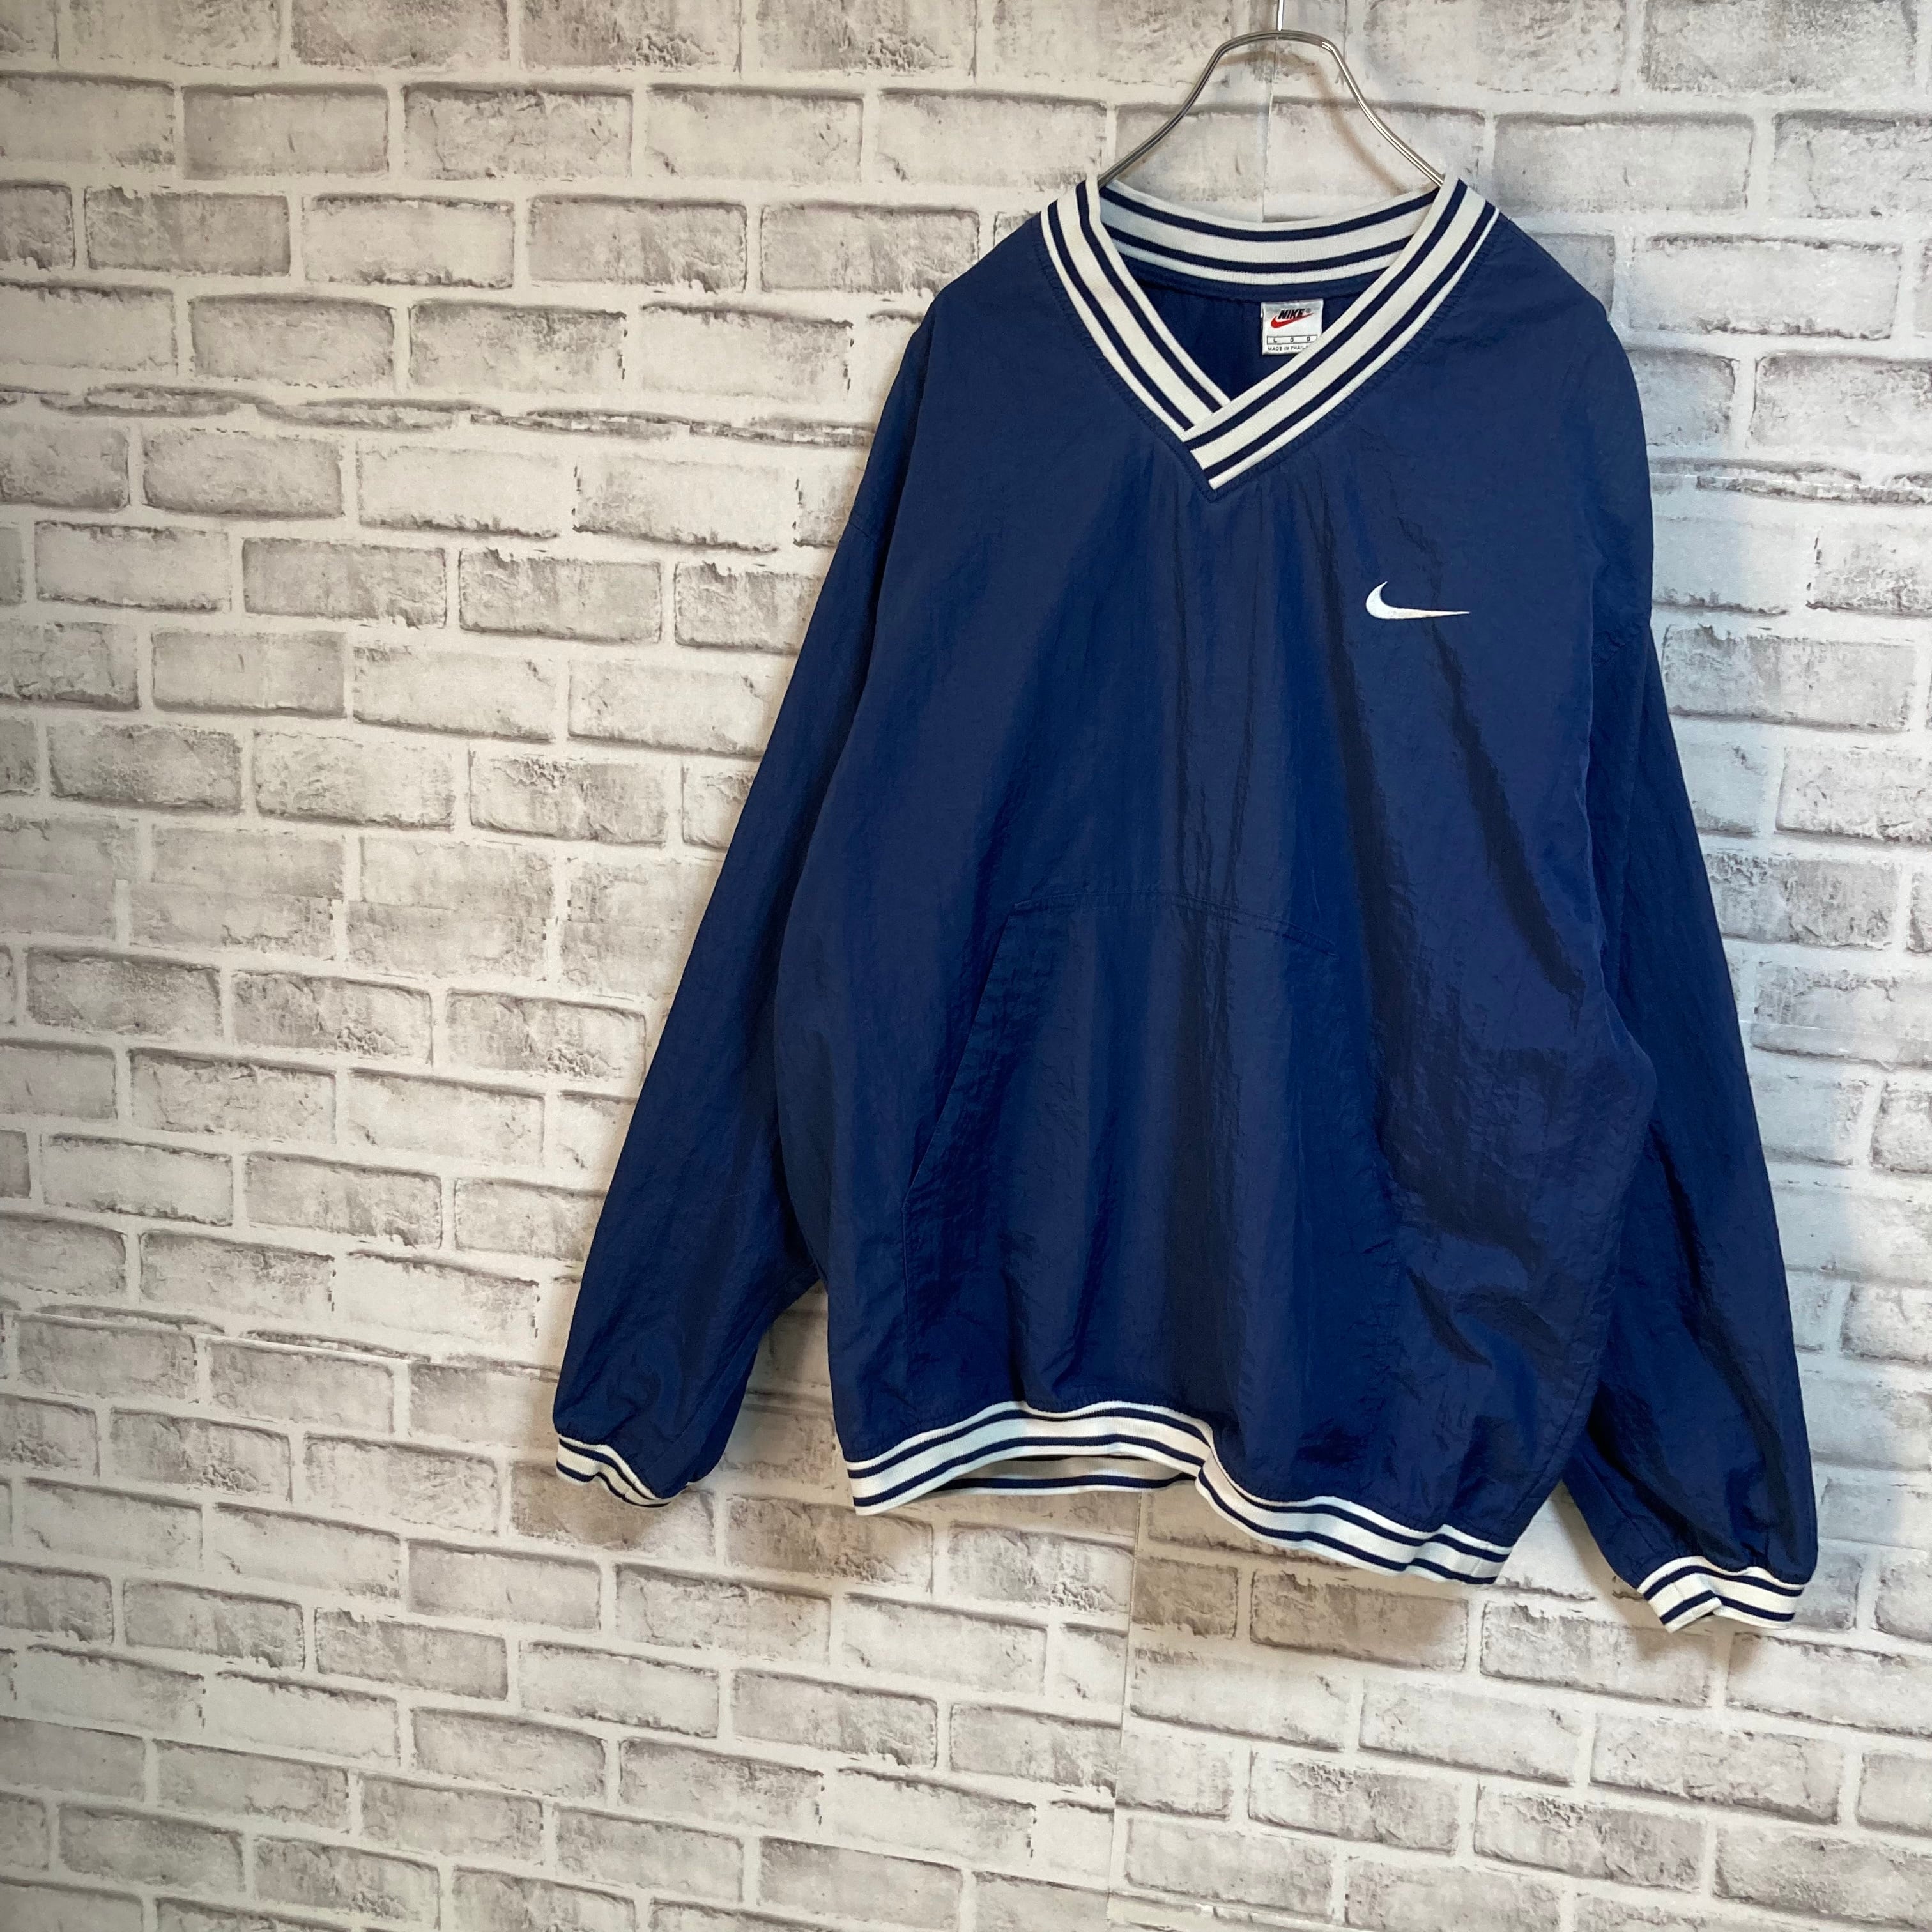 NIKE】Nylon Pullover Jacket L 90s vintage ナイキ カレッジ